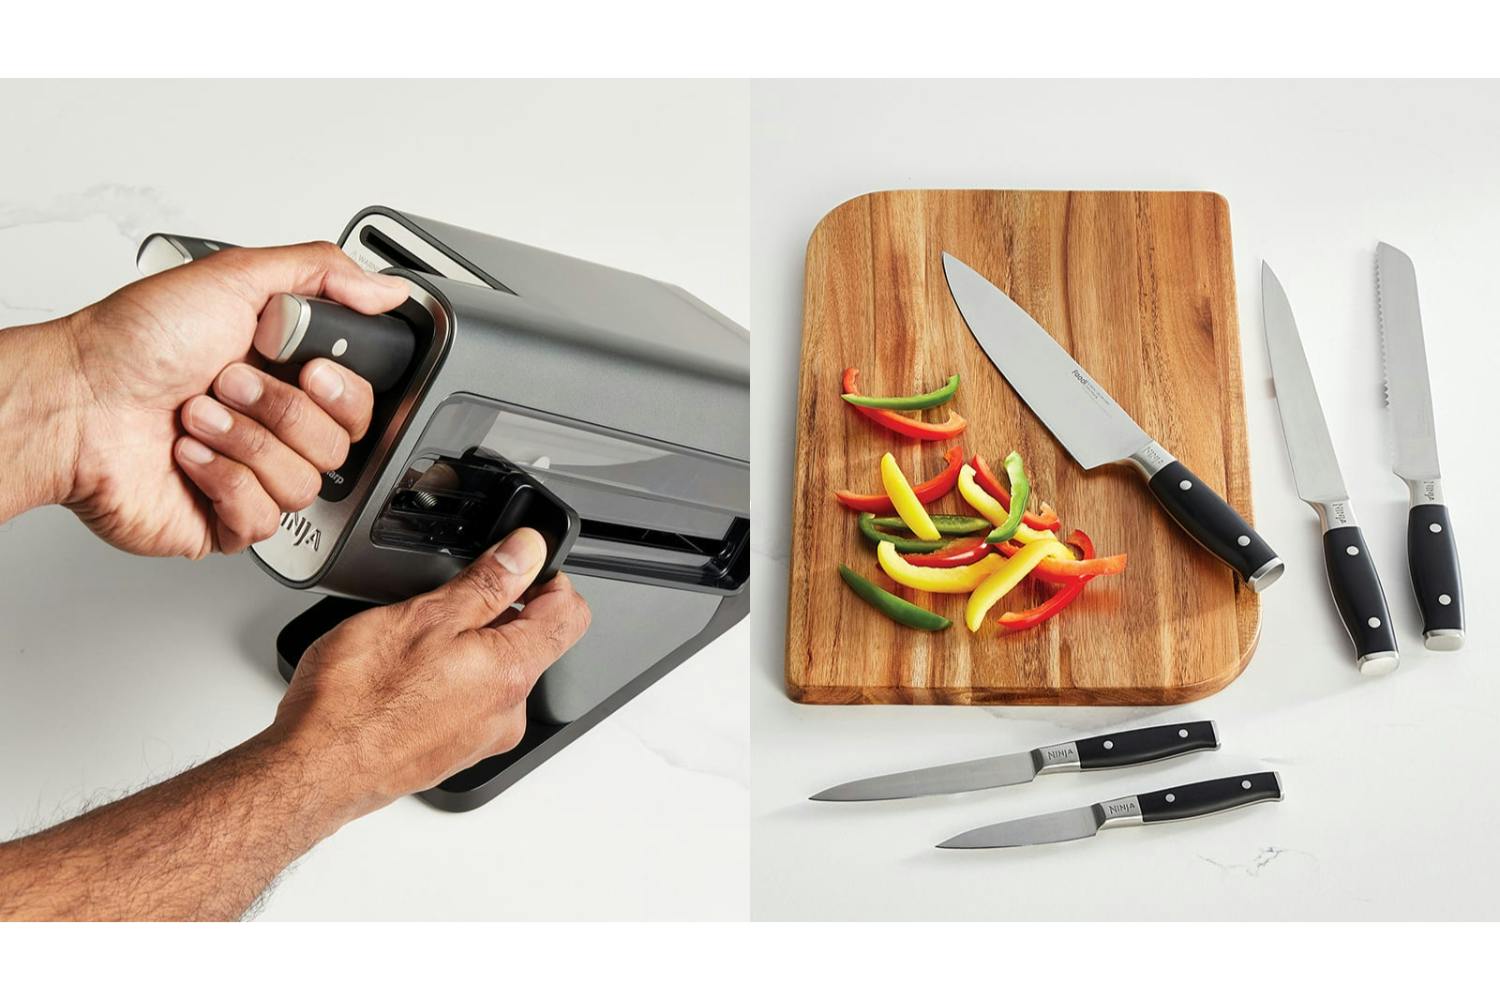 Ninja Foodi StaySharp Knife Block with Integrated Sharpener, 5-Piece Knife  Set includes Chef Knife, Bread Knife, Slicing Knife, Utility Knife, Paring  Knife, Stainless Steel K32005UK